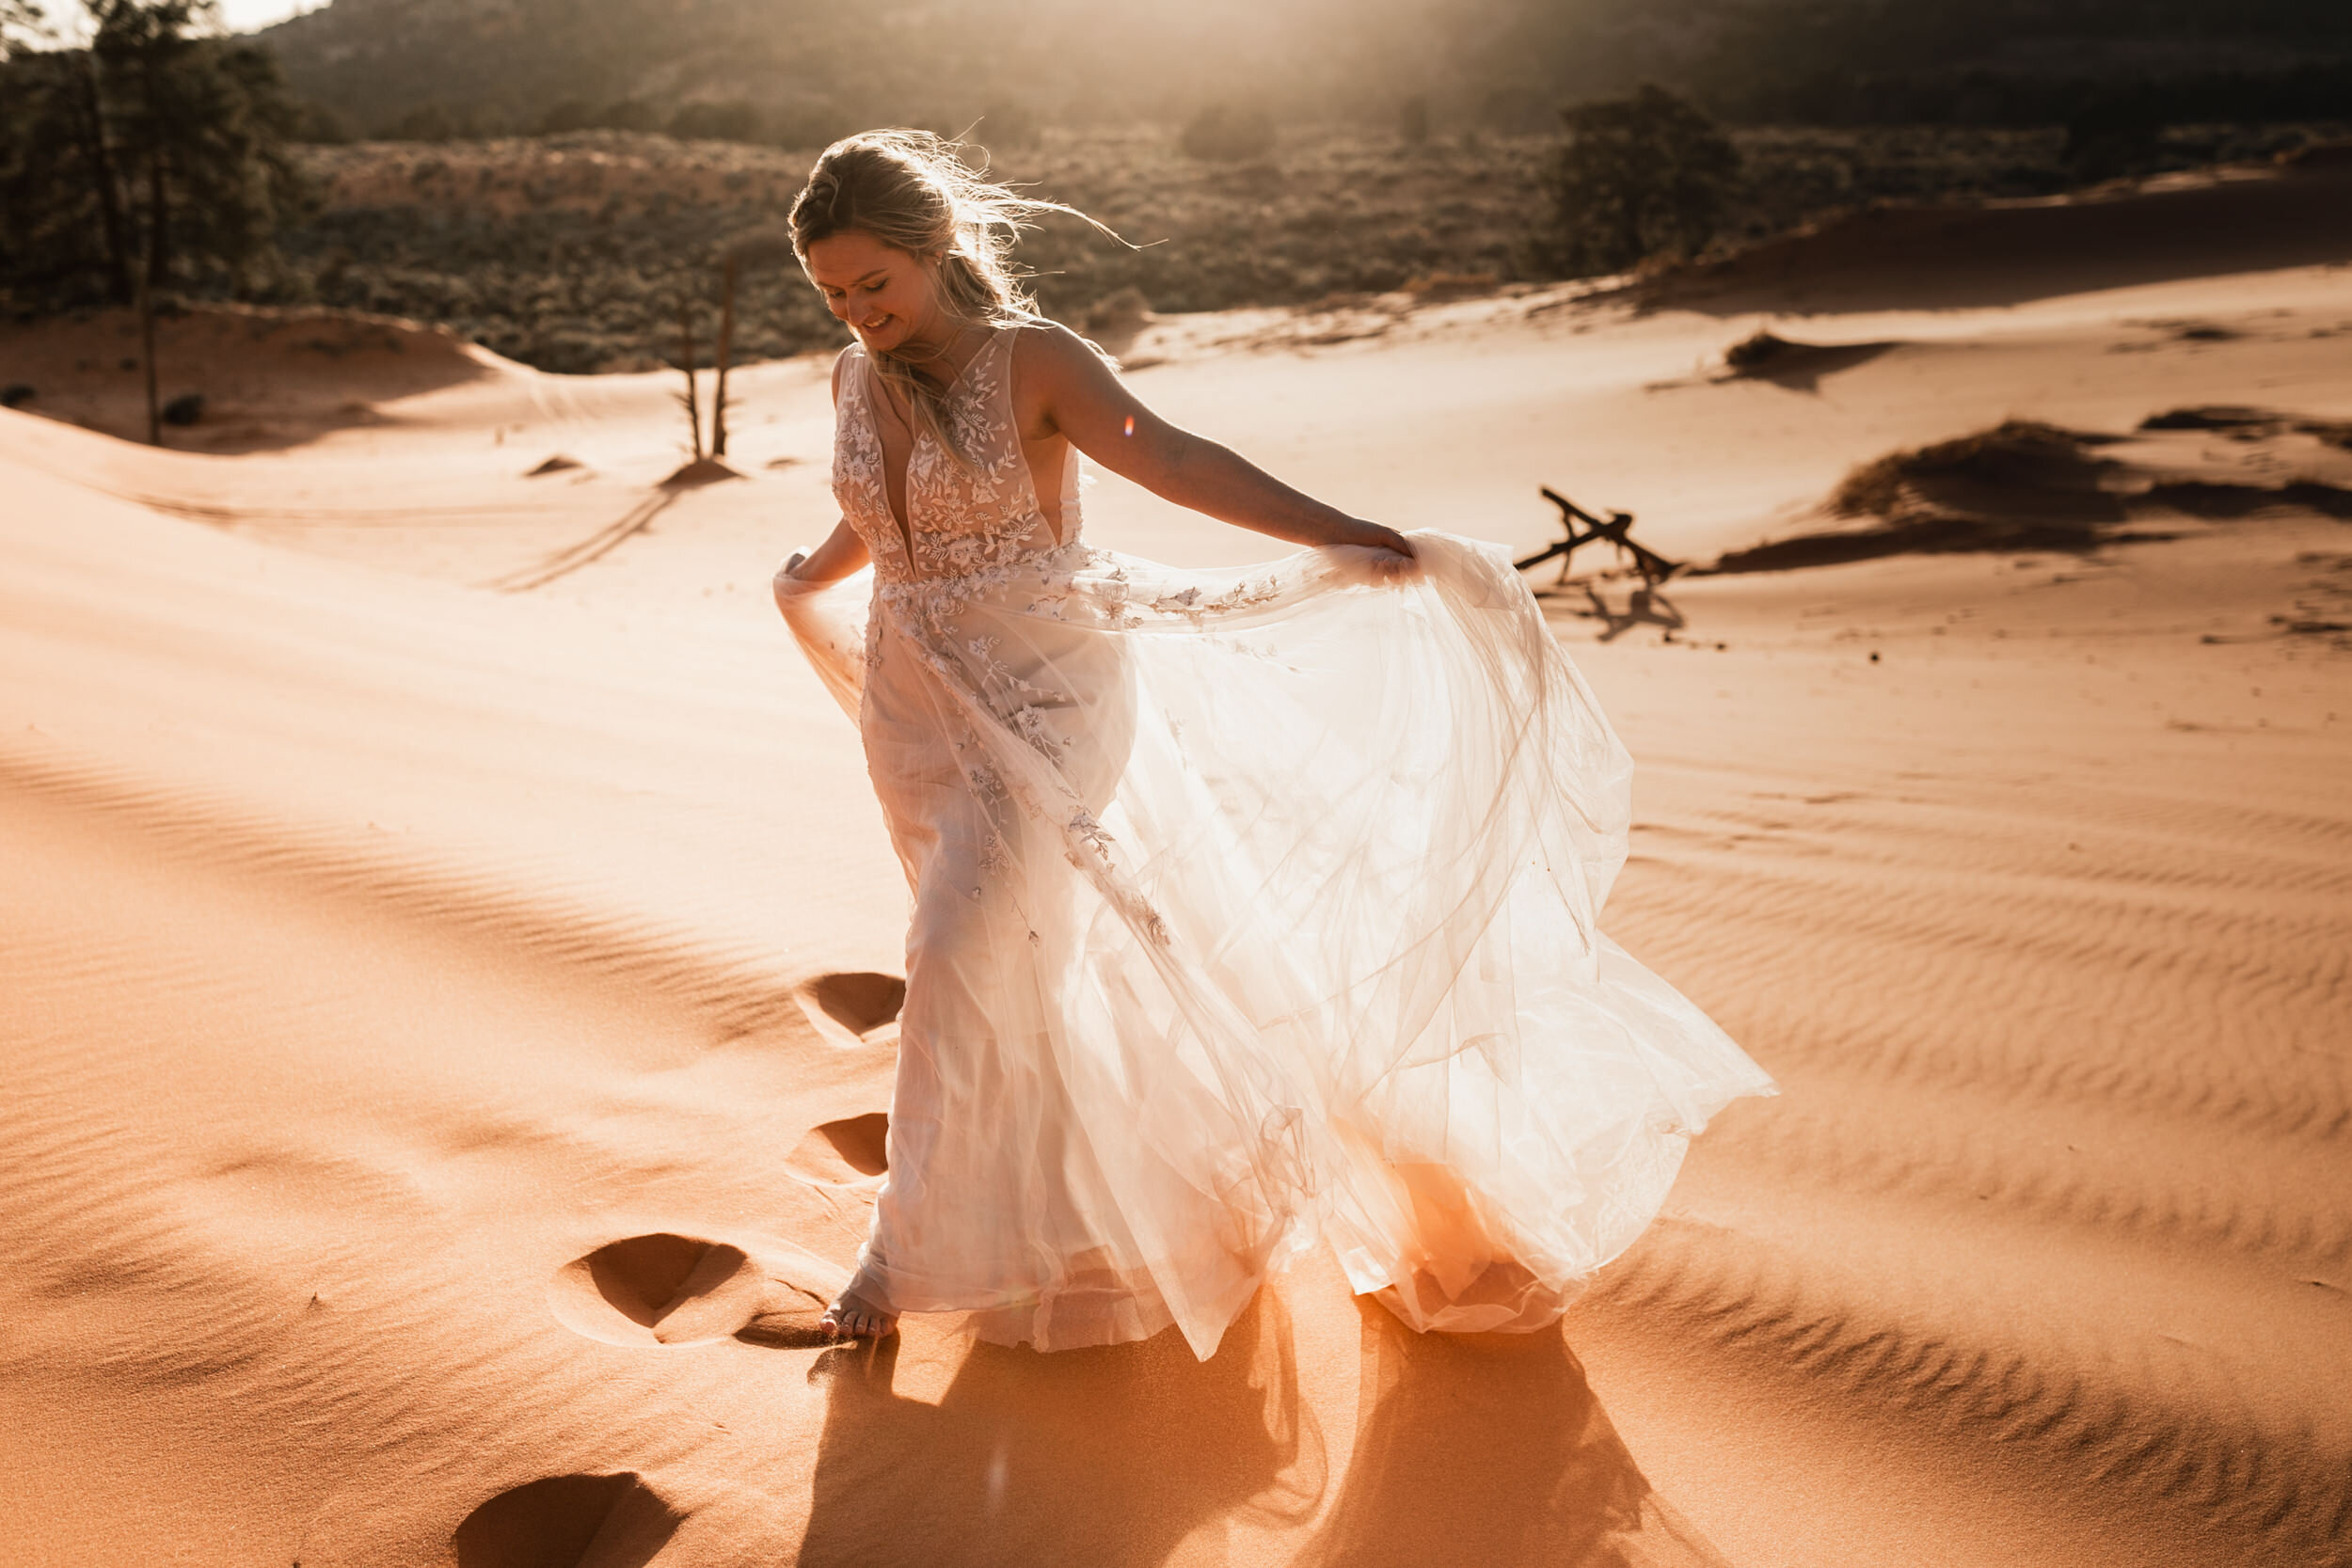 Utah Elopement | Adventurous Intimate Wedding in Sand Dunes at Sunset | The Hearnes Photography